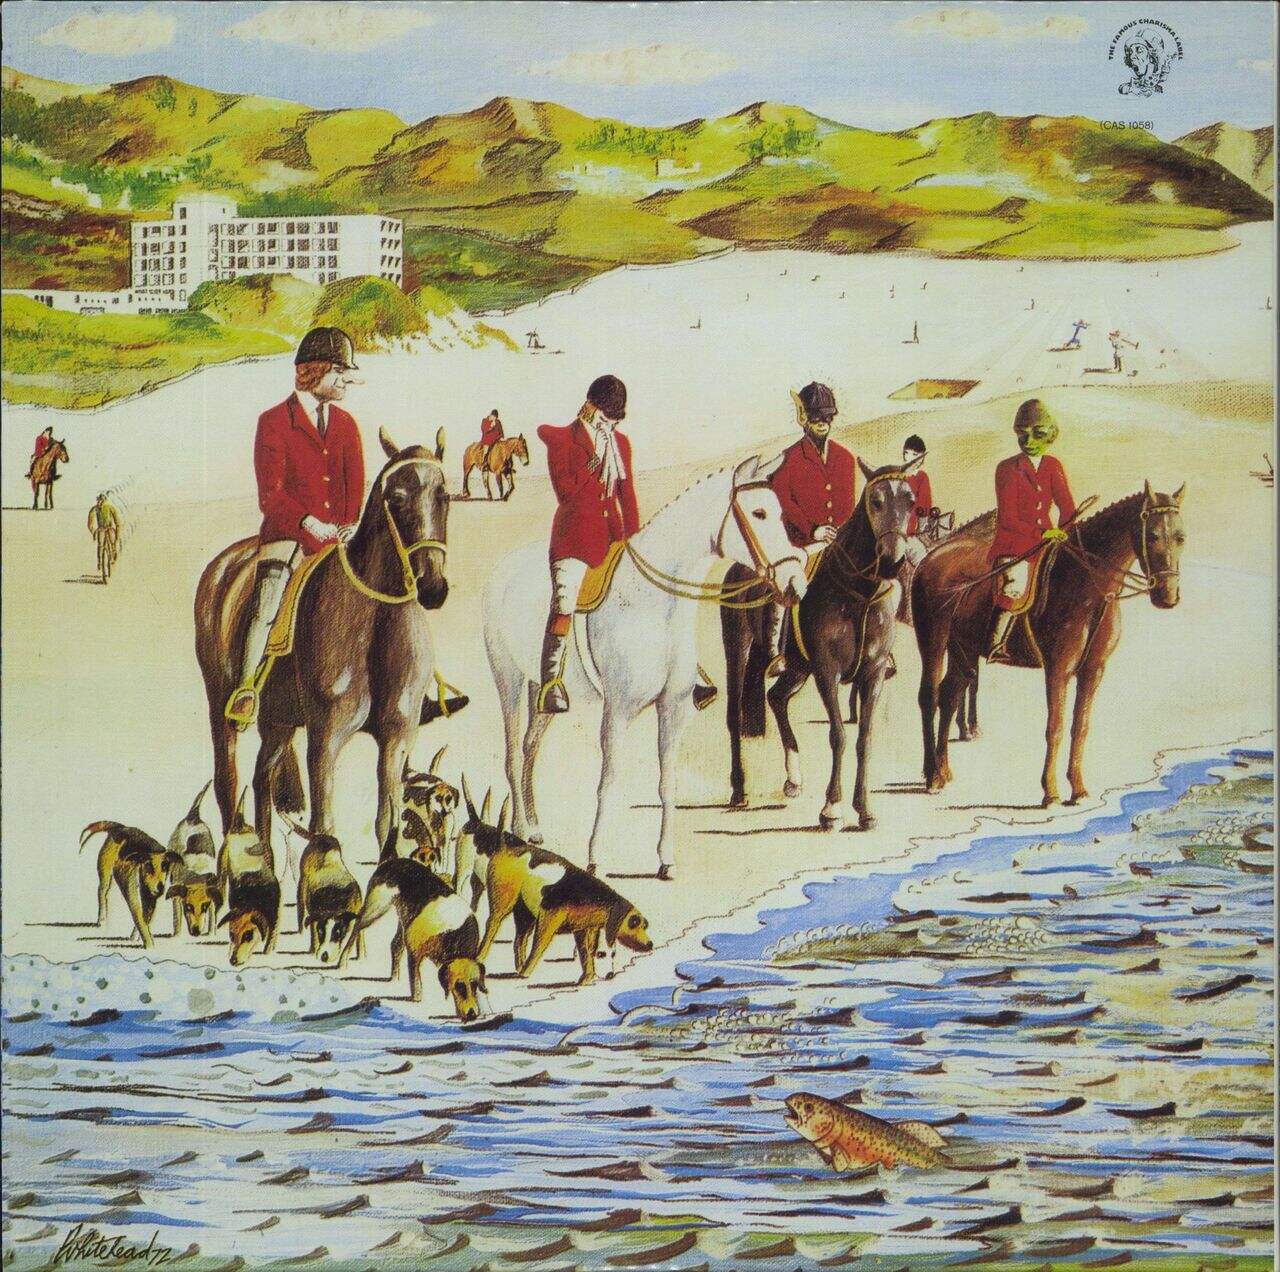 Genesis Foxtrot - 200gm US Vinyl LP